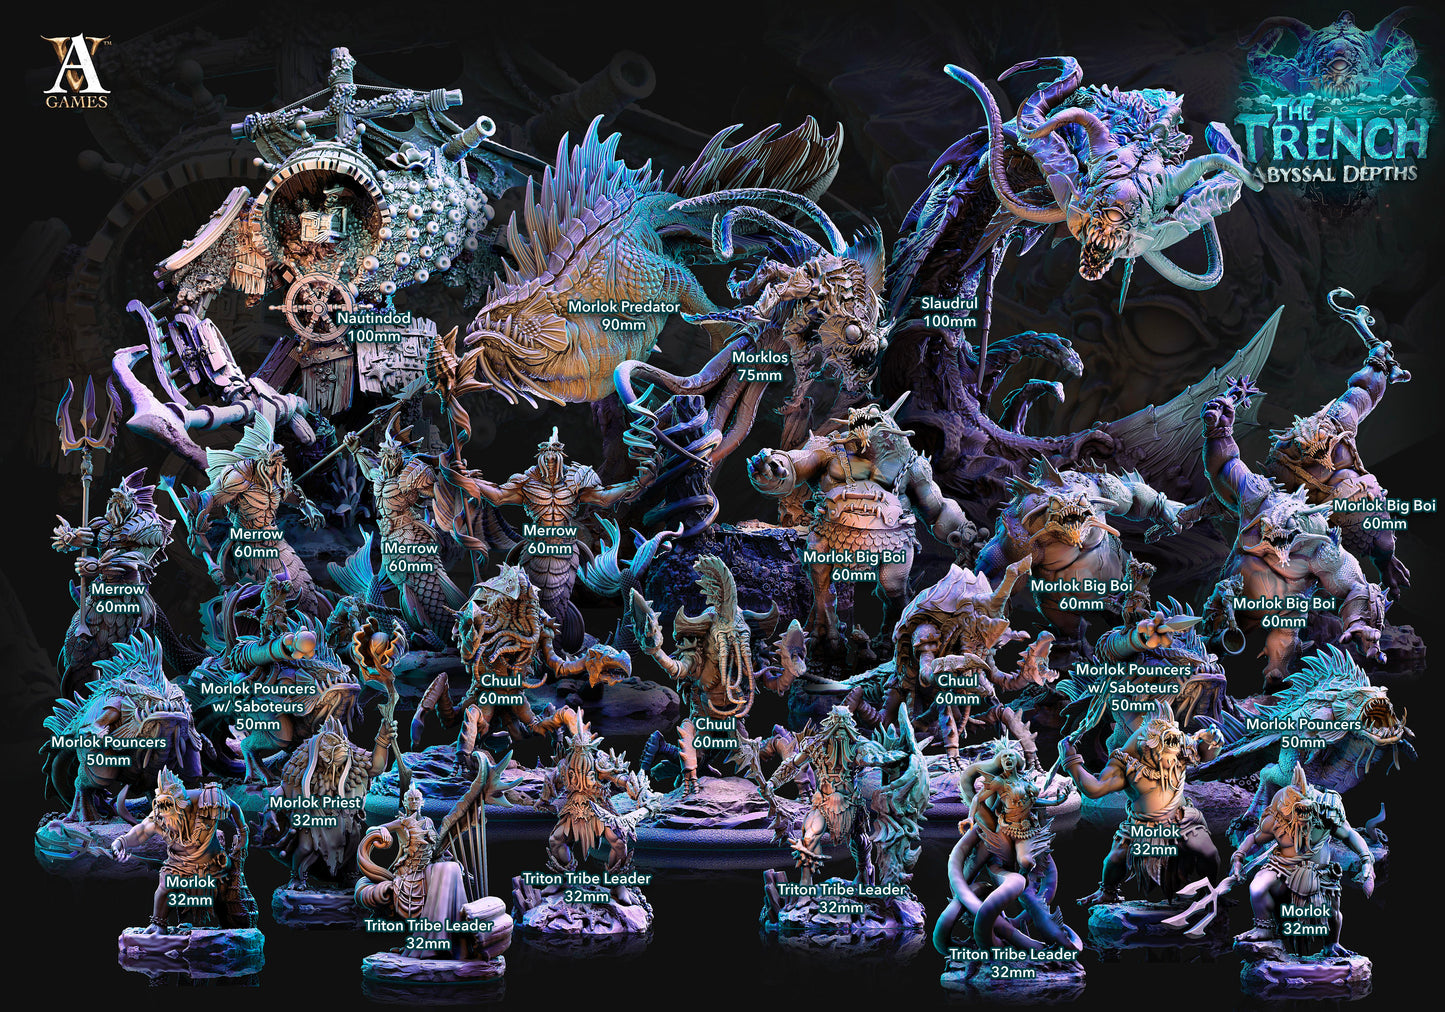 Morlock Big Bois - Archvillain Games Printed Miniature | Dungeons & Dragons | Pathfinder | Tabletop